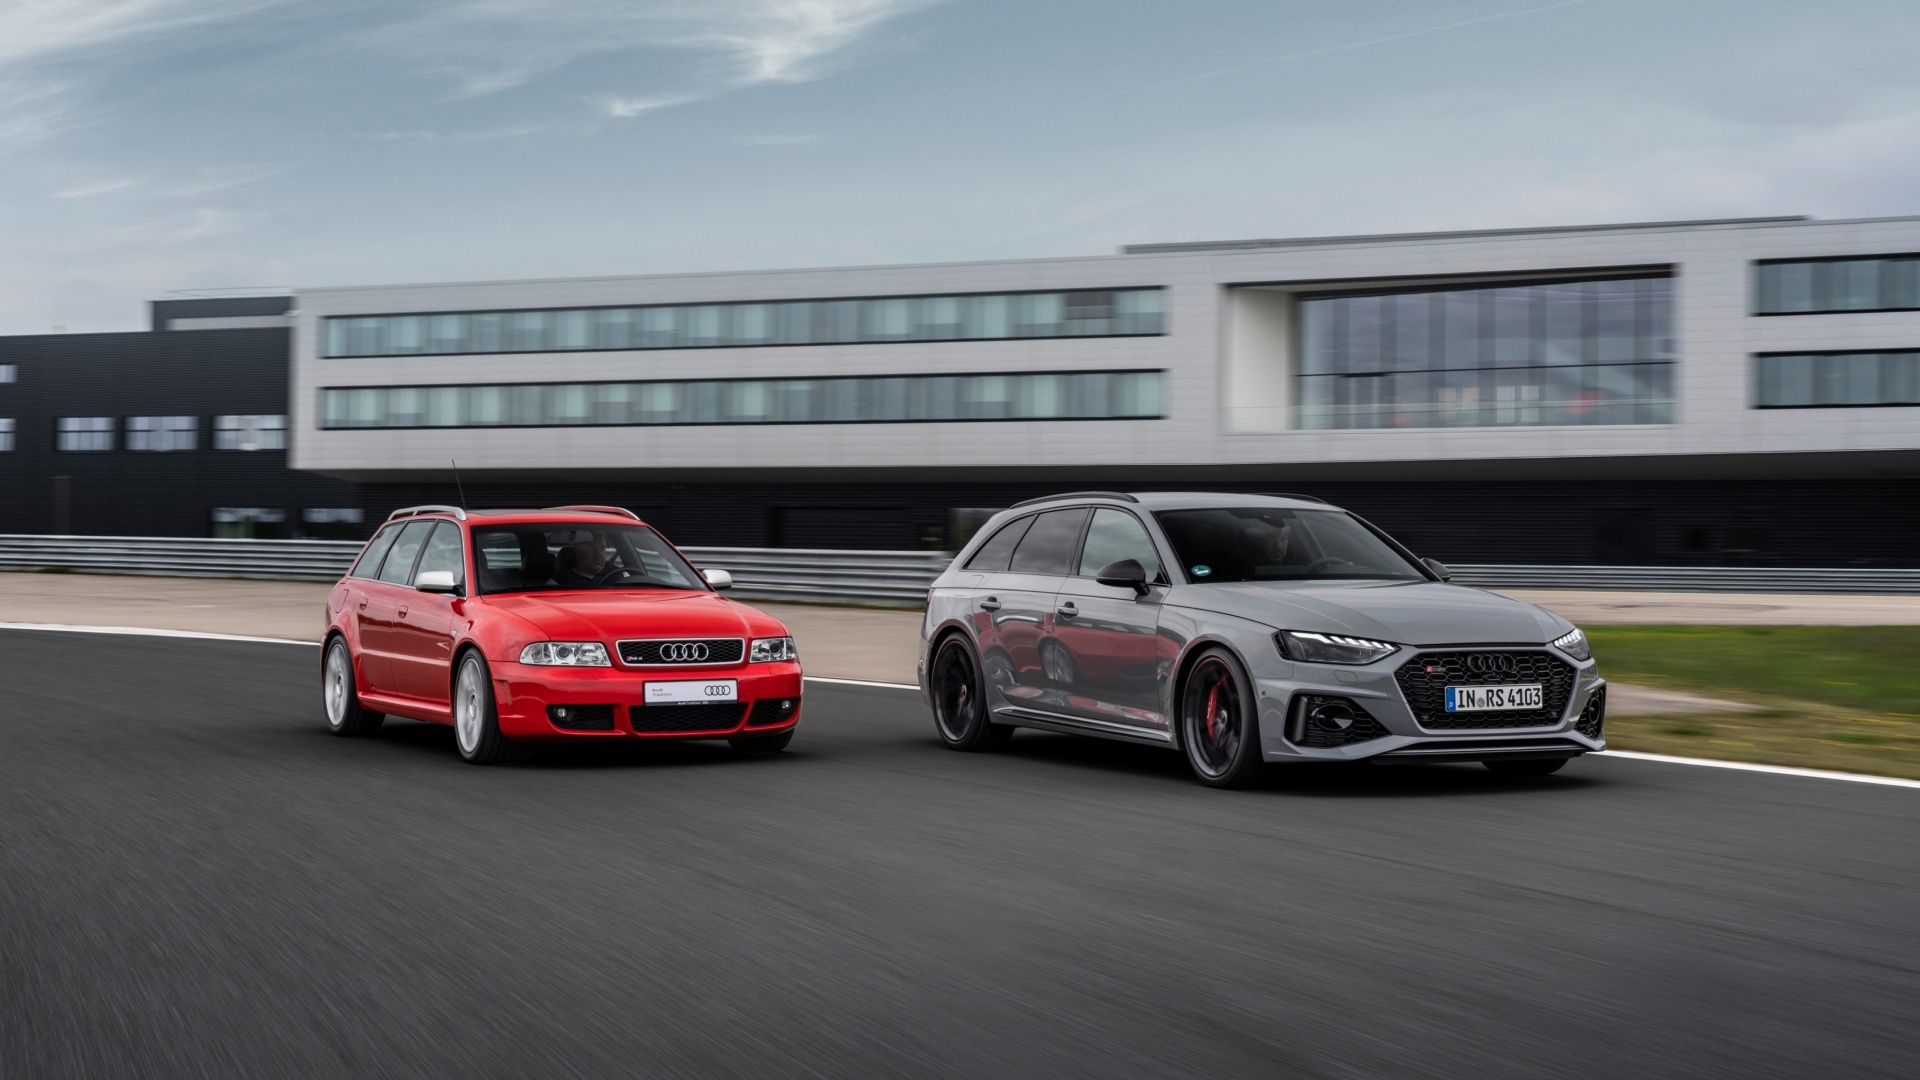 Un Audi RS 4 (B5) y un modelo Audi RS actual circulan en un circuito de competición.